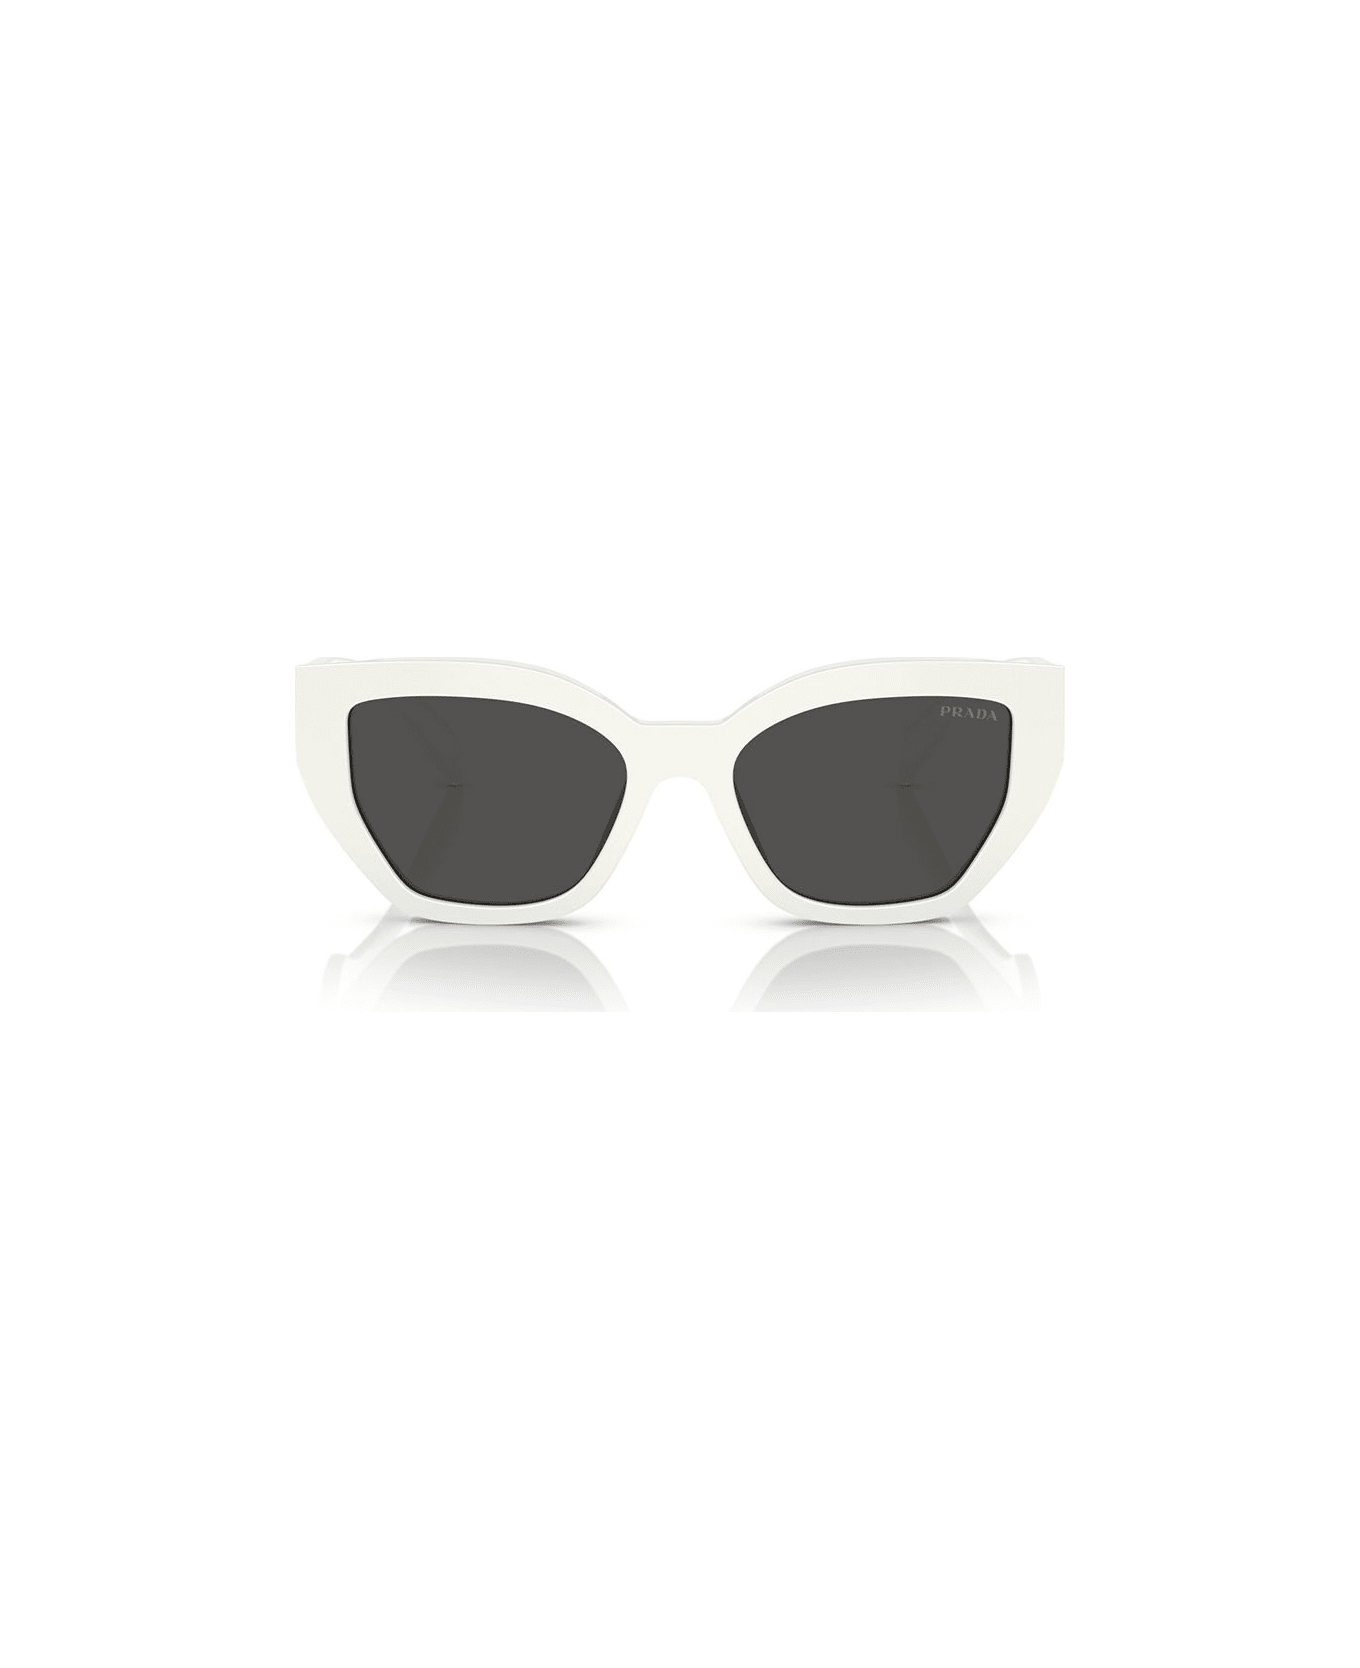 Prada Eyewear Sunglasses - 1425S0